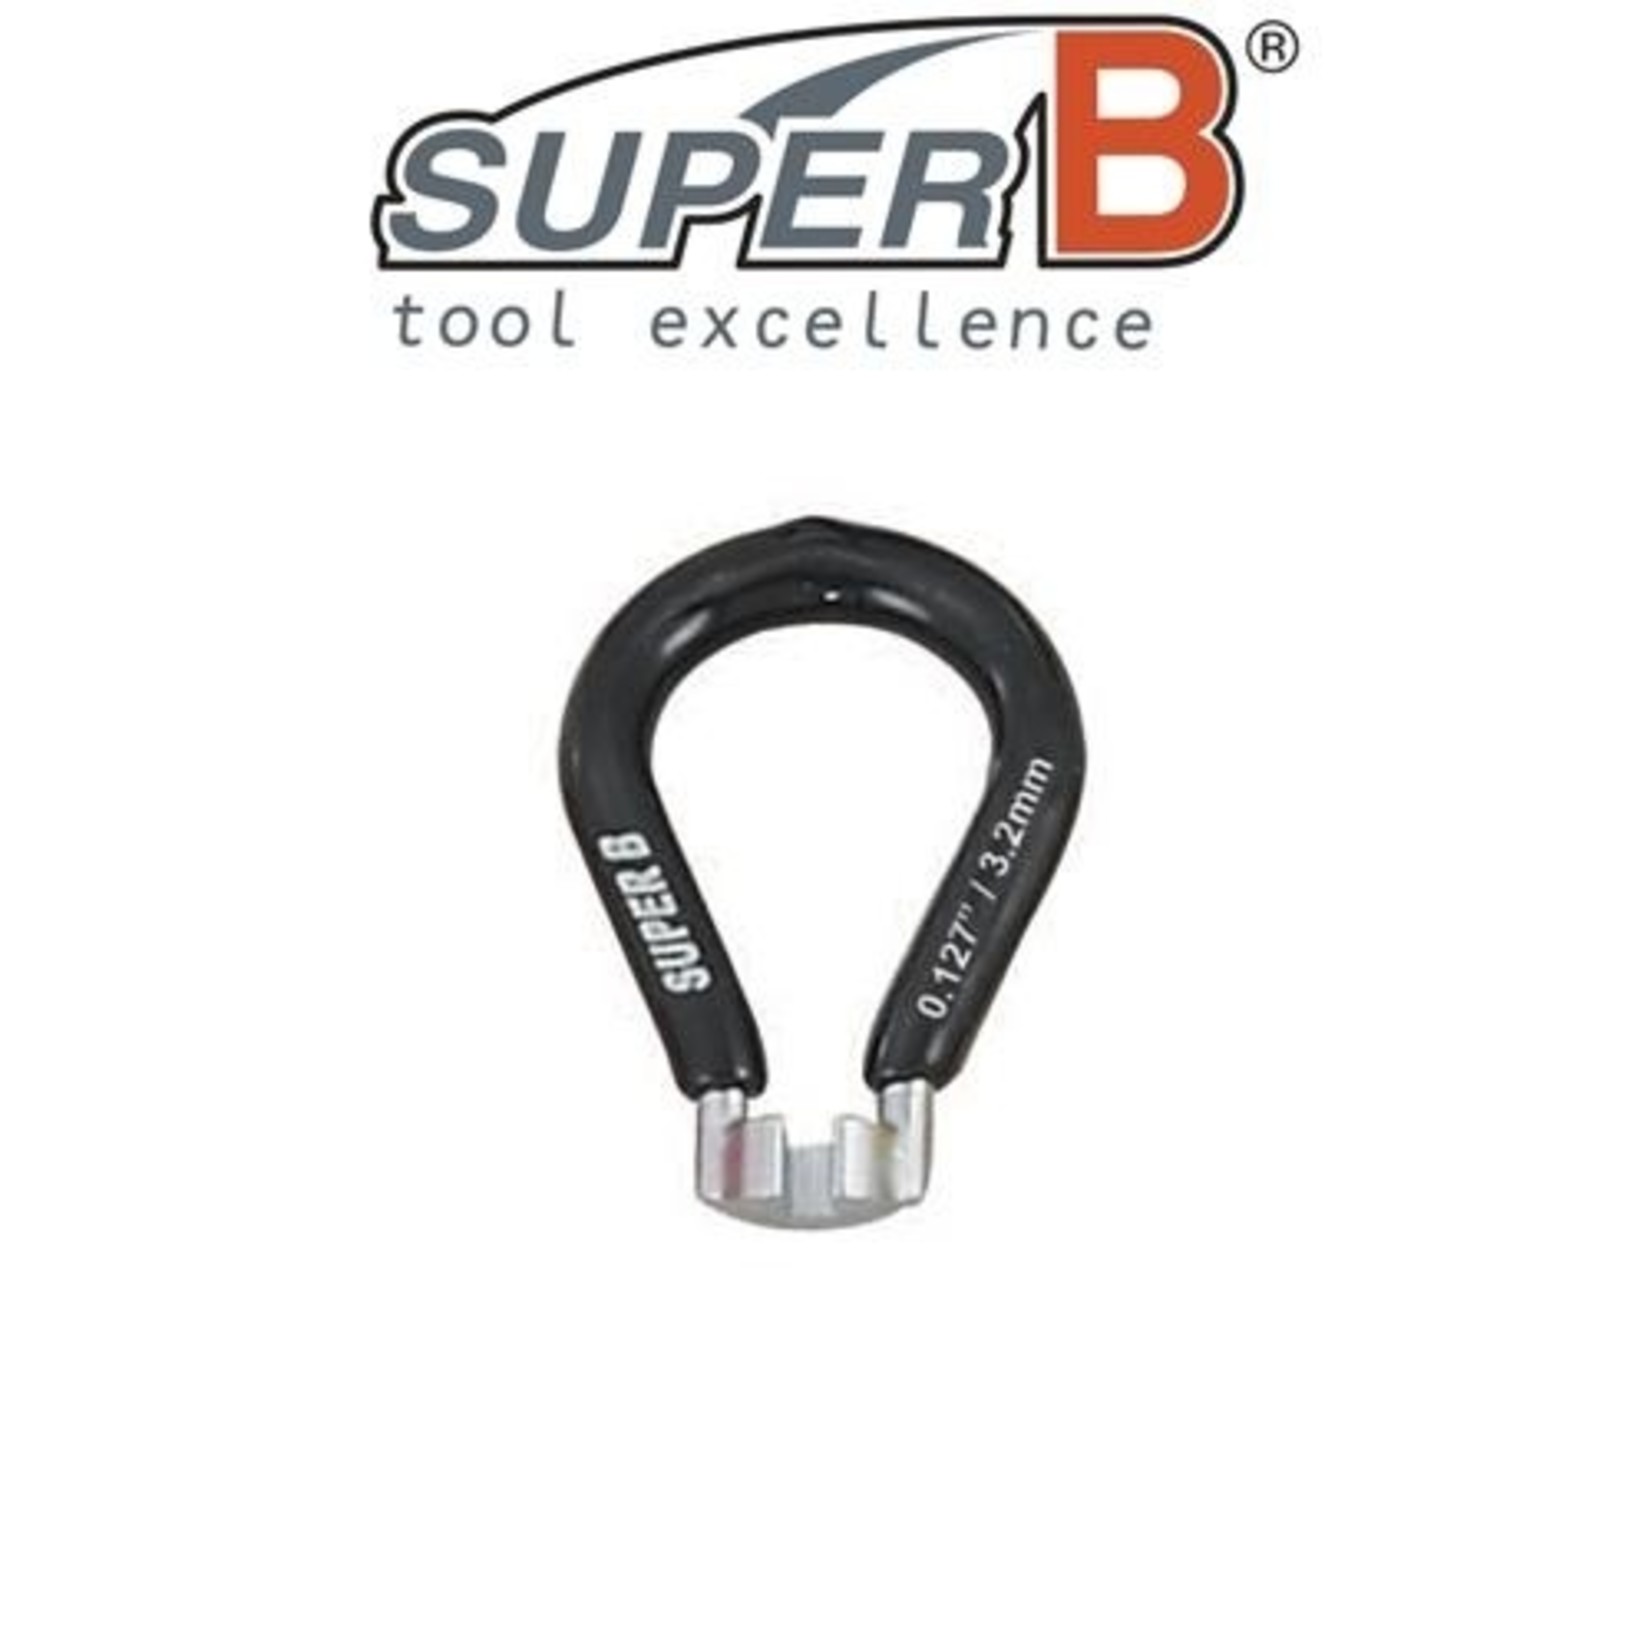 Super B SuperB Spoke Wrench - 3.2mm - Nickel Plated Hardened Steel - Bike Tool